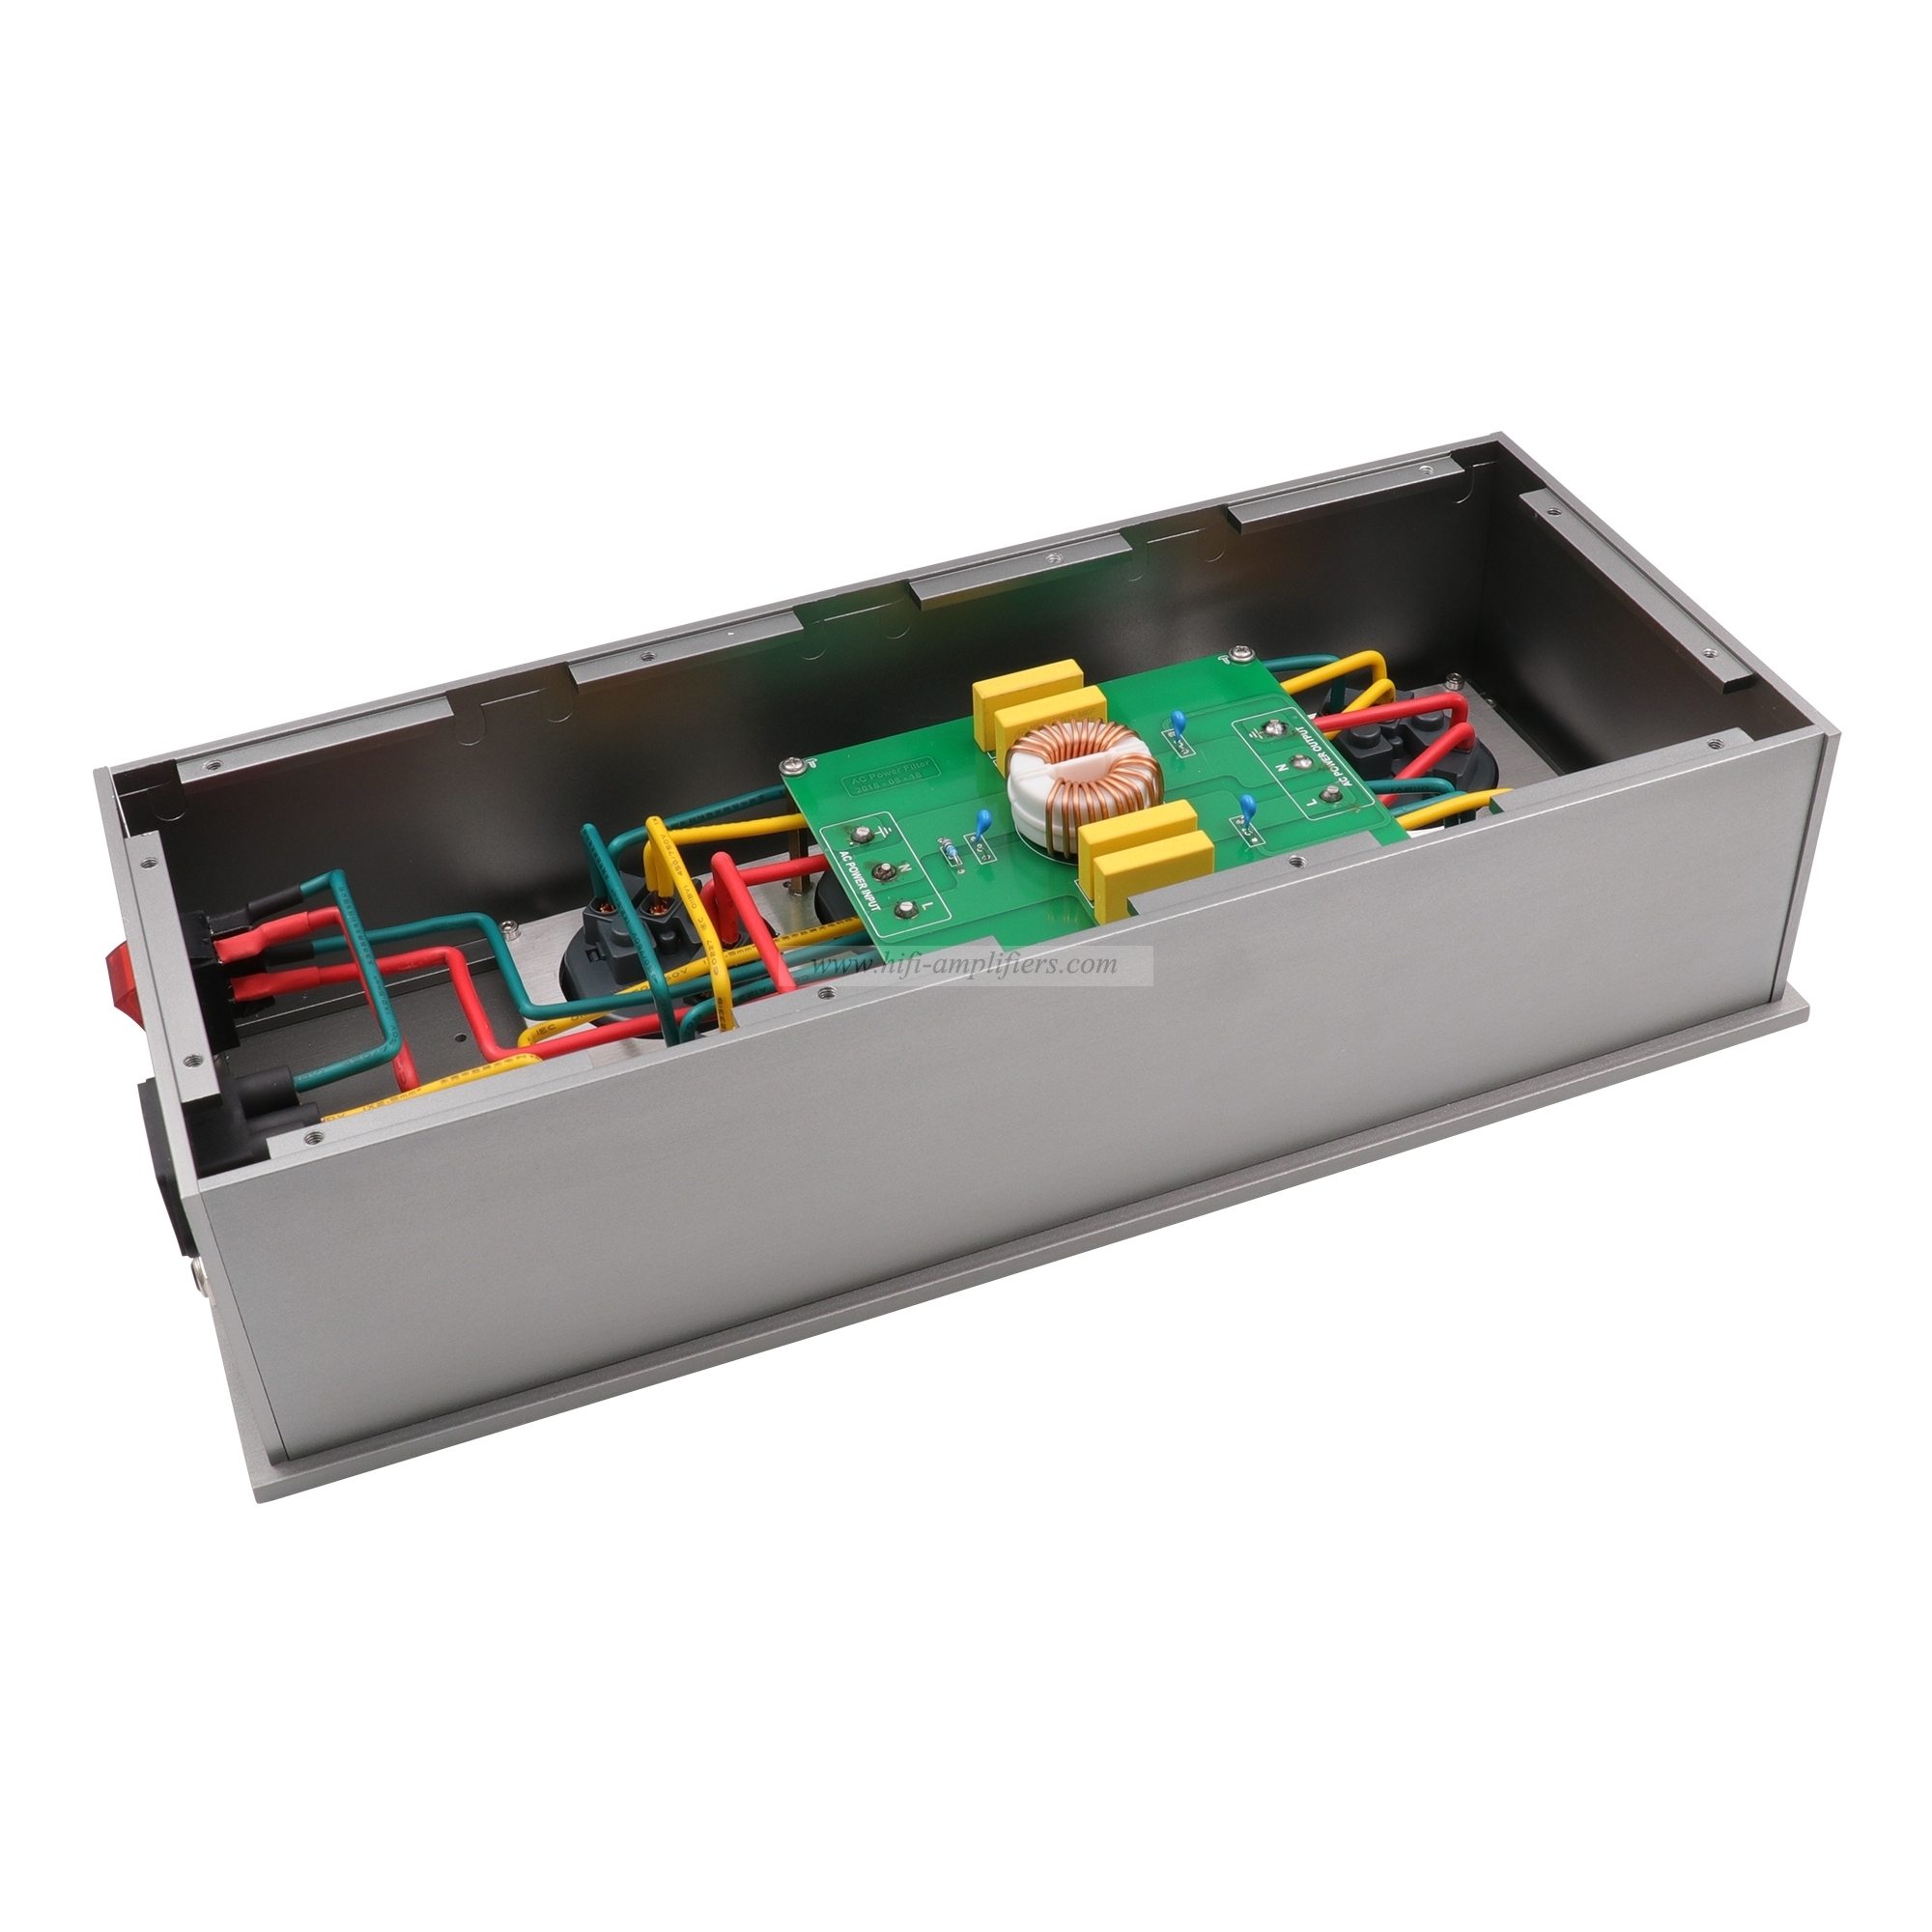 Viborg VE80 Hifi Audio EU Schuko Outlets Noise Filter AC Power Conditioner Audiophile Power Filter Power Purifier